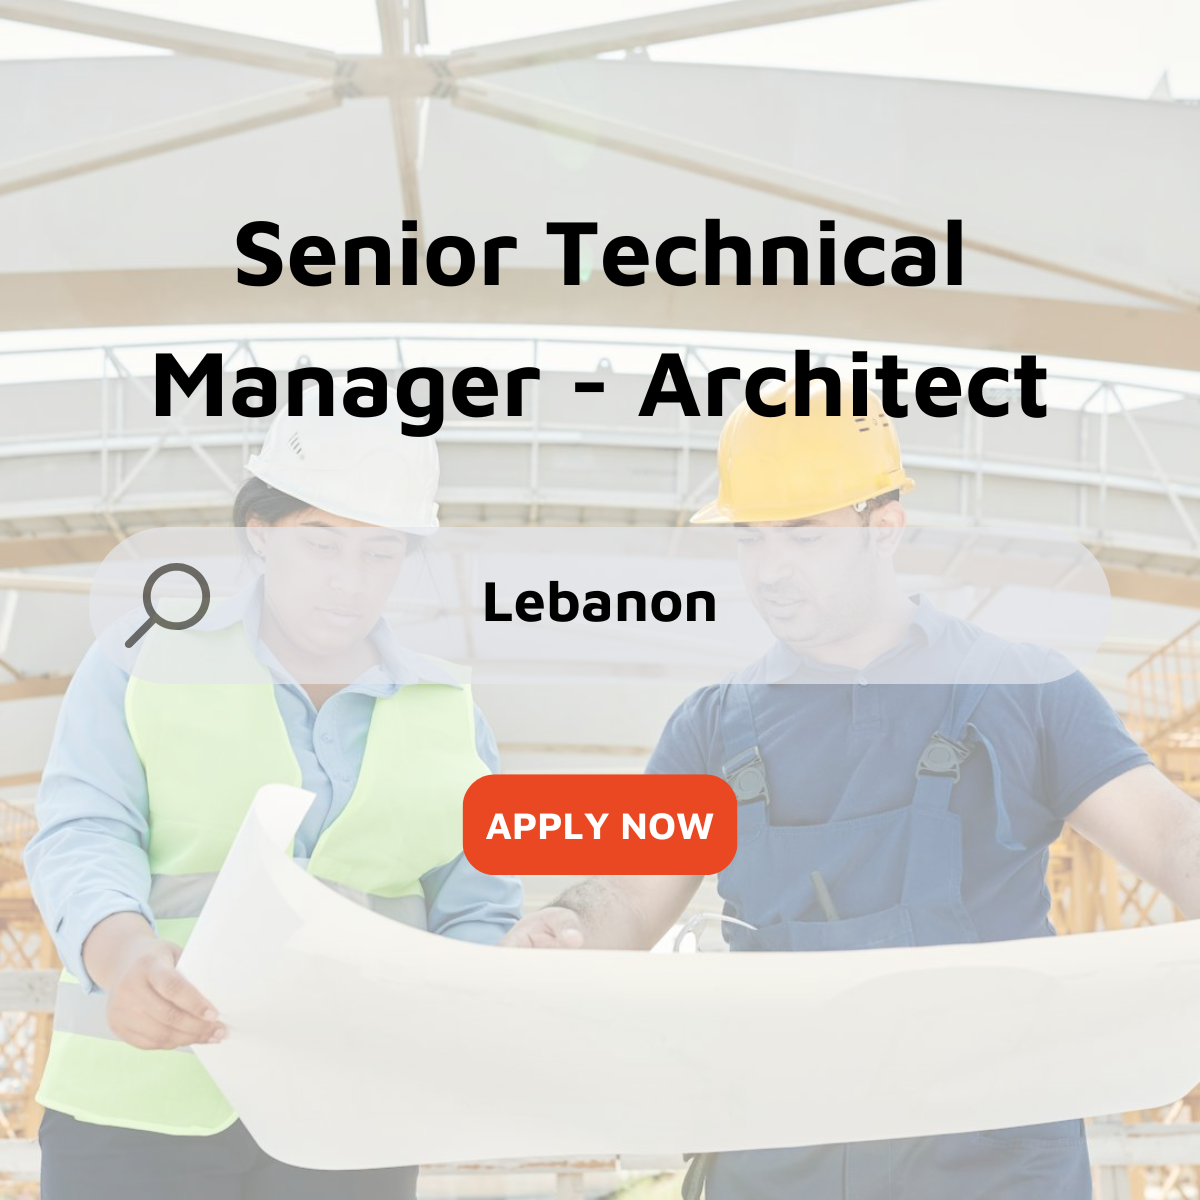 Senior Technical Manager - Architect